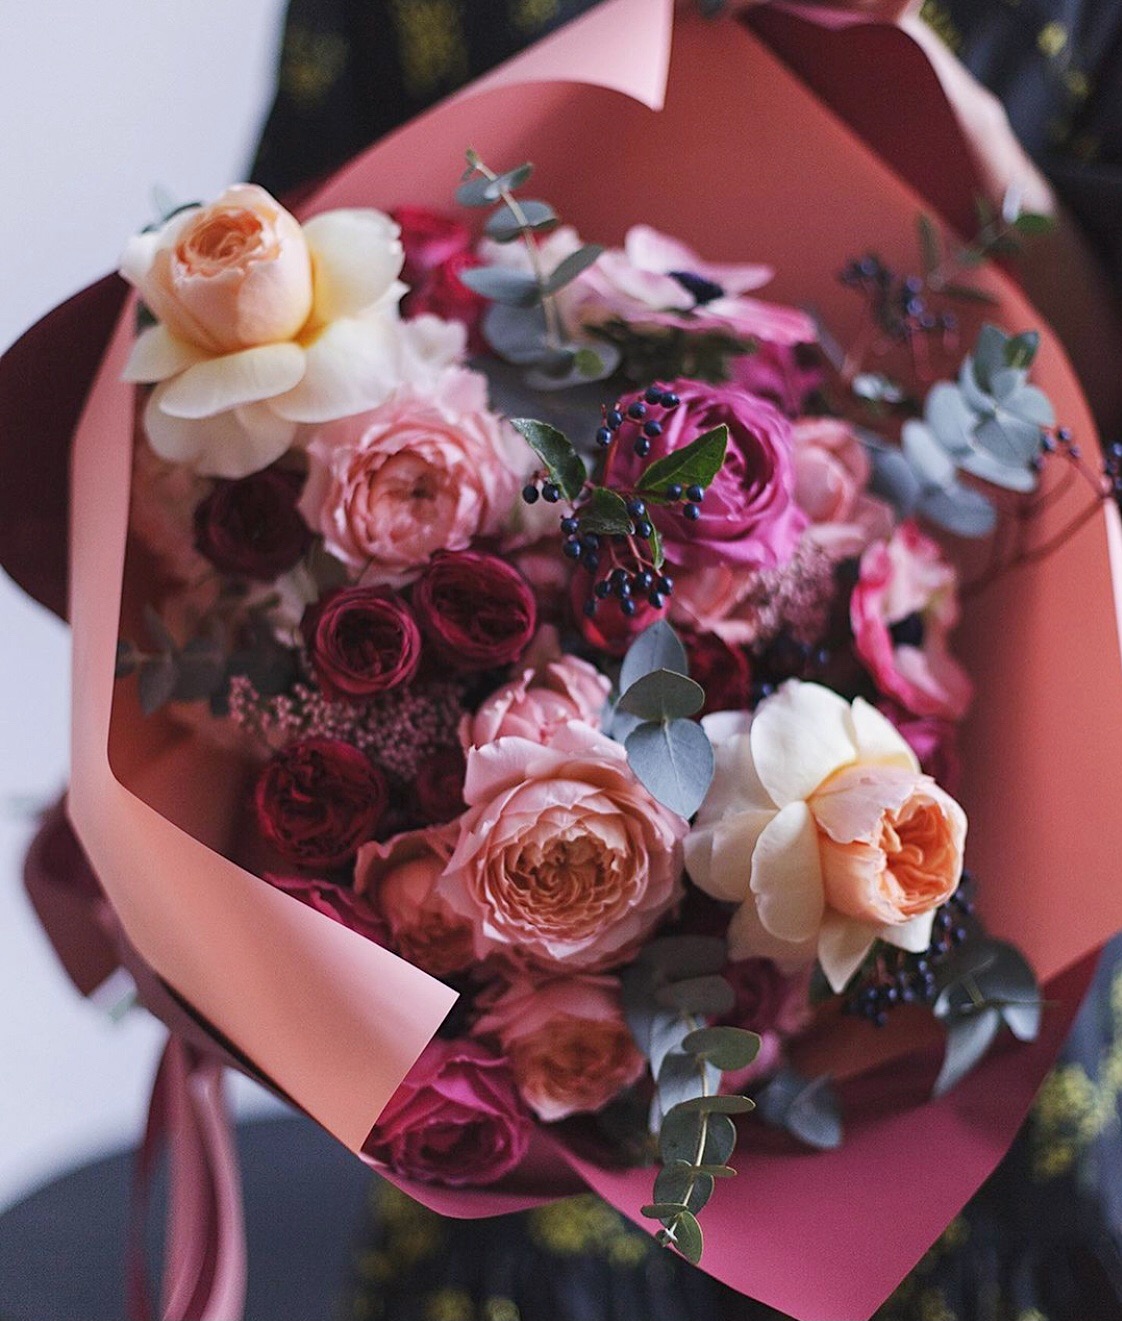 Enchanted Glitter Roses – PBC Gifts